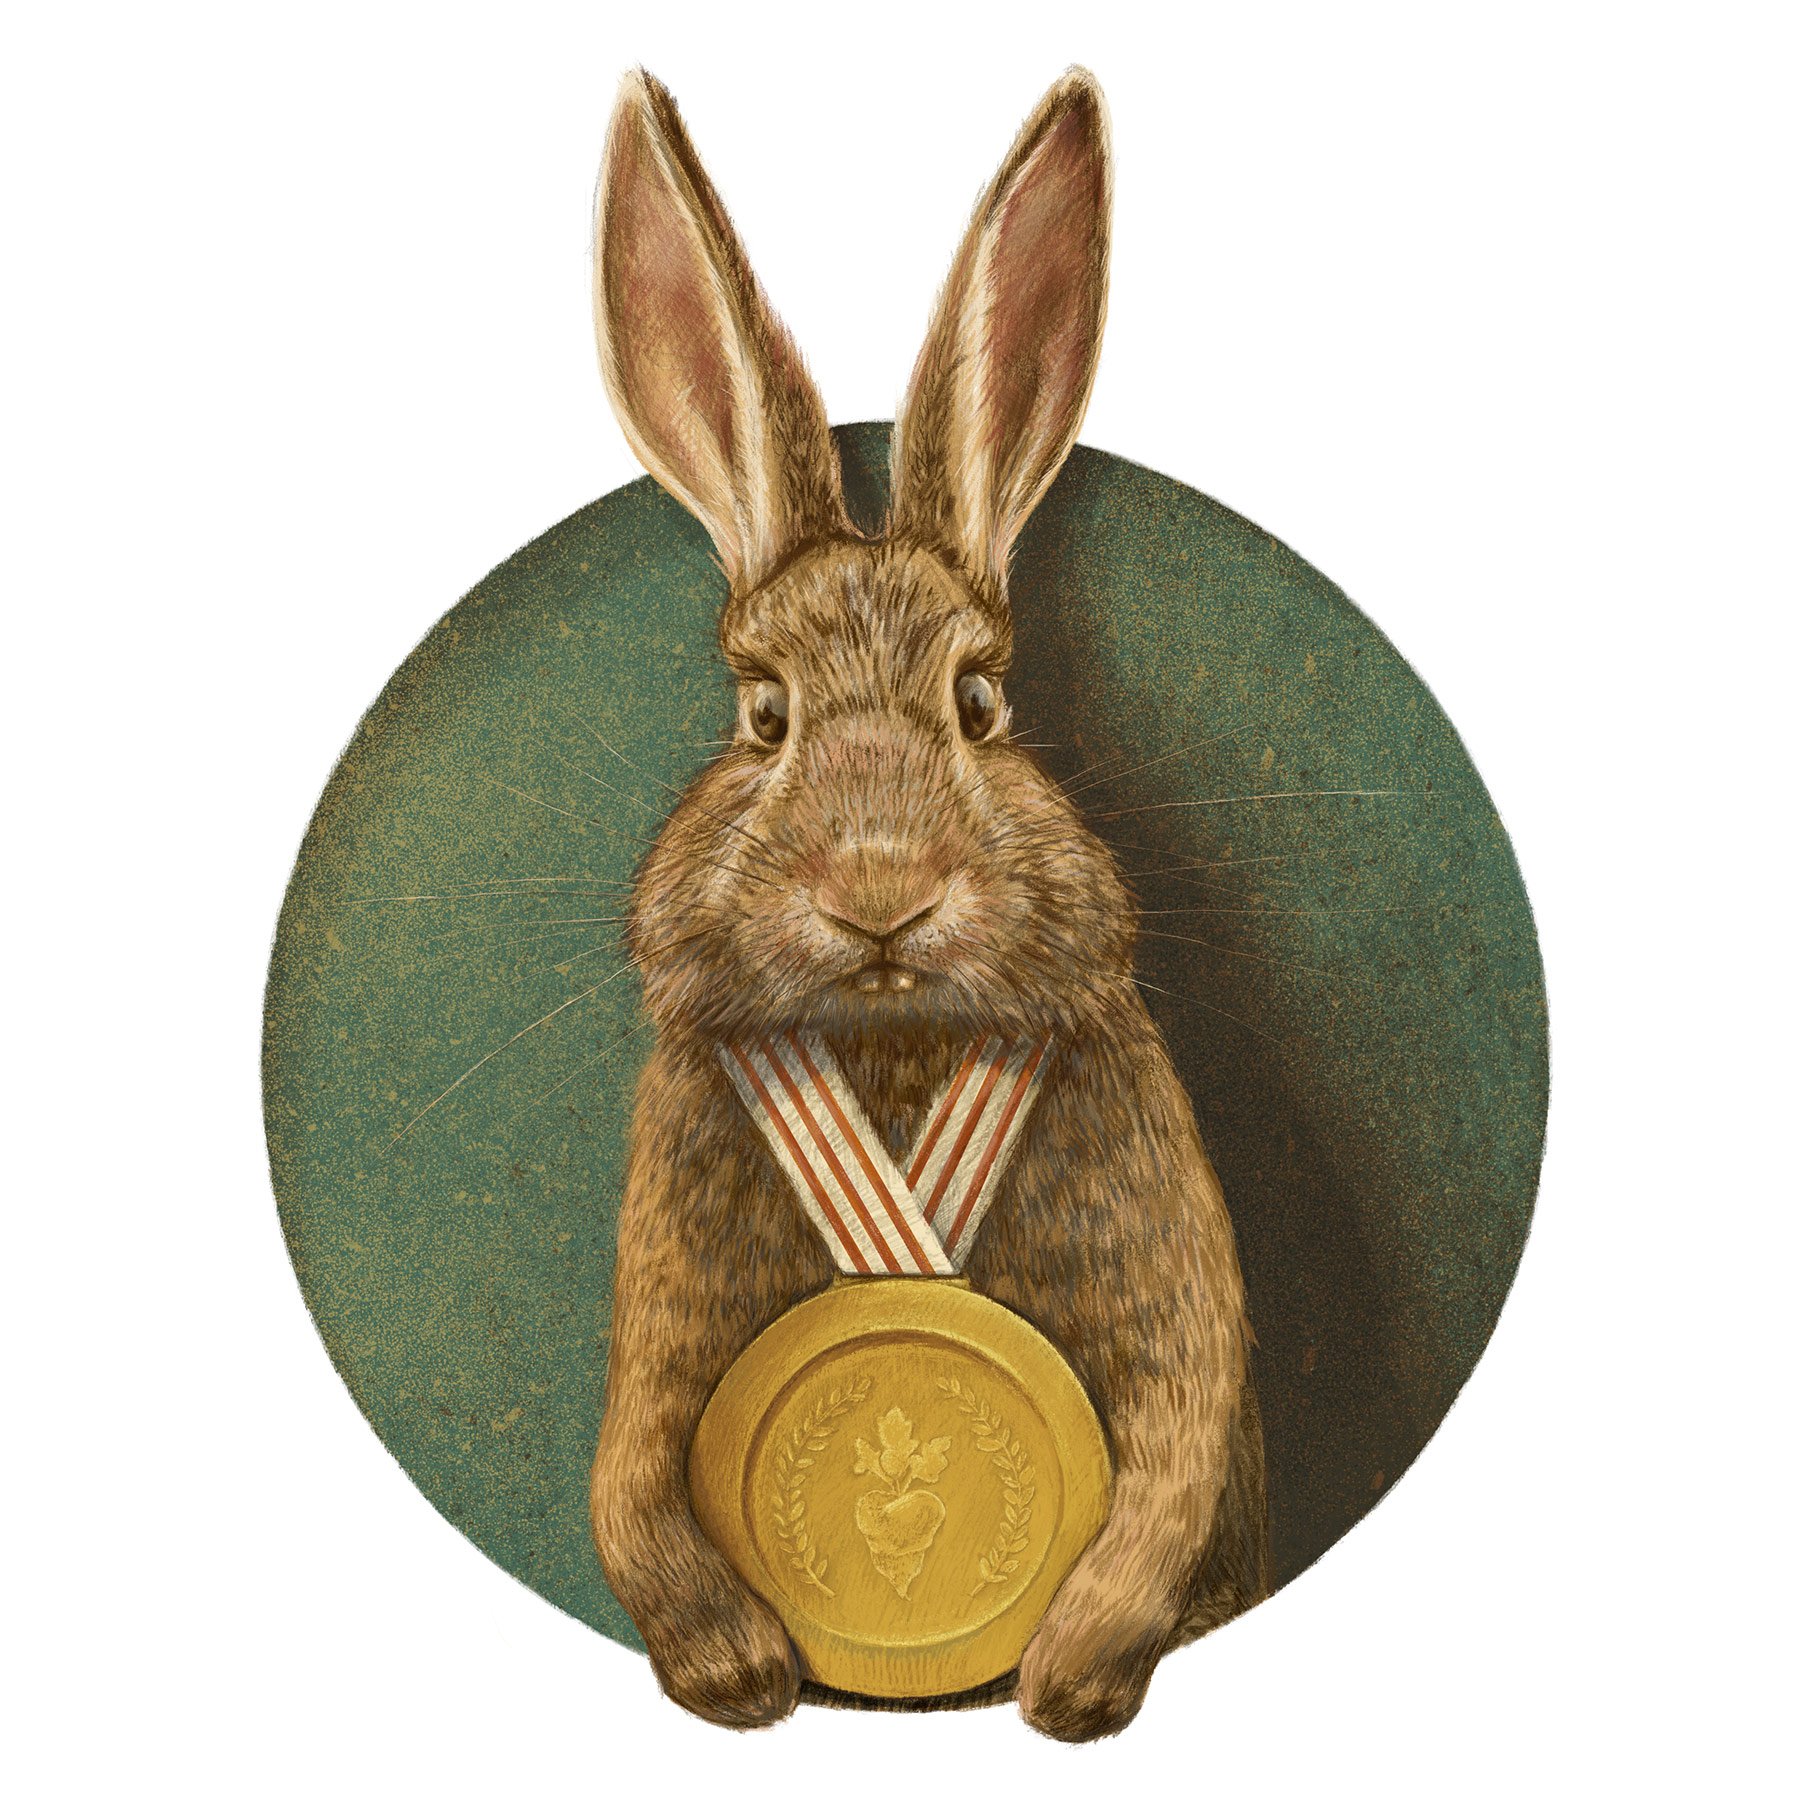 Champion rabbit illustration